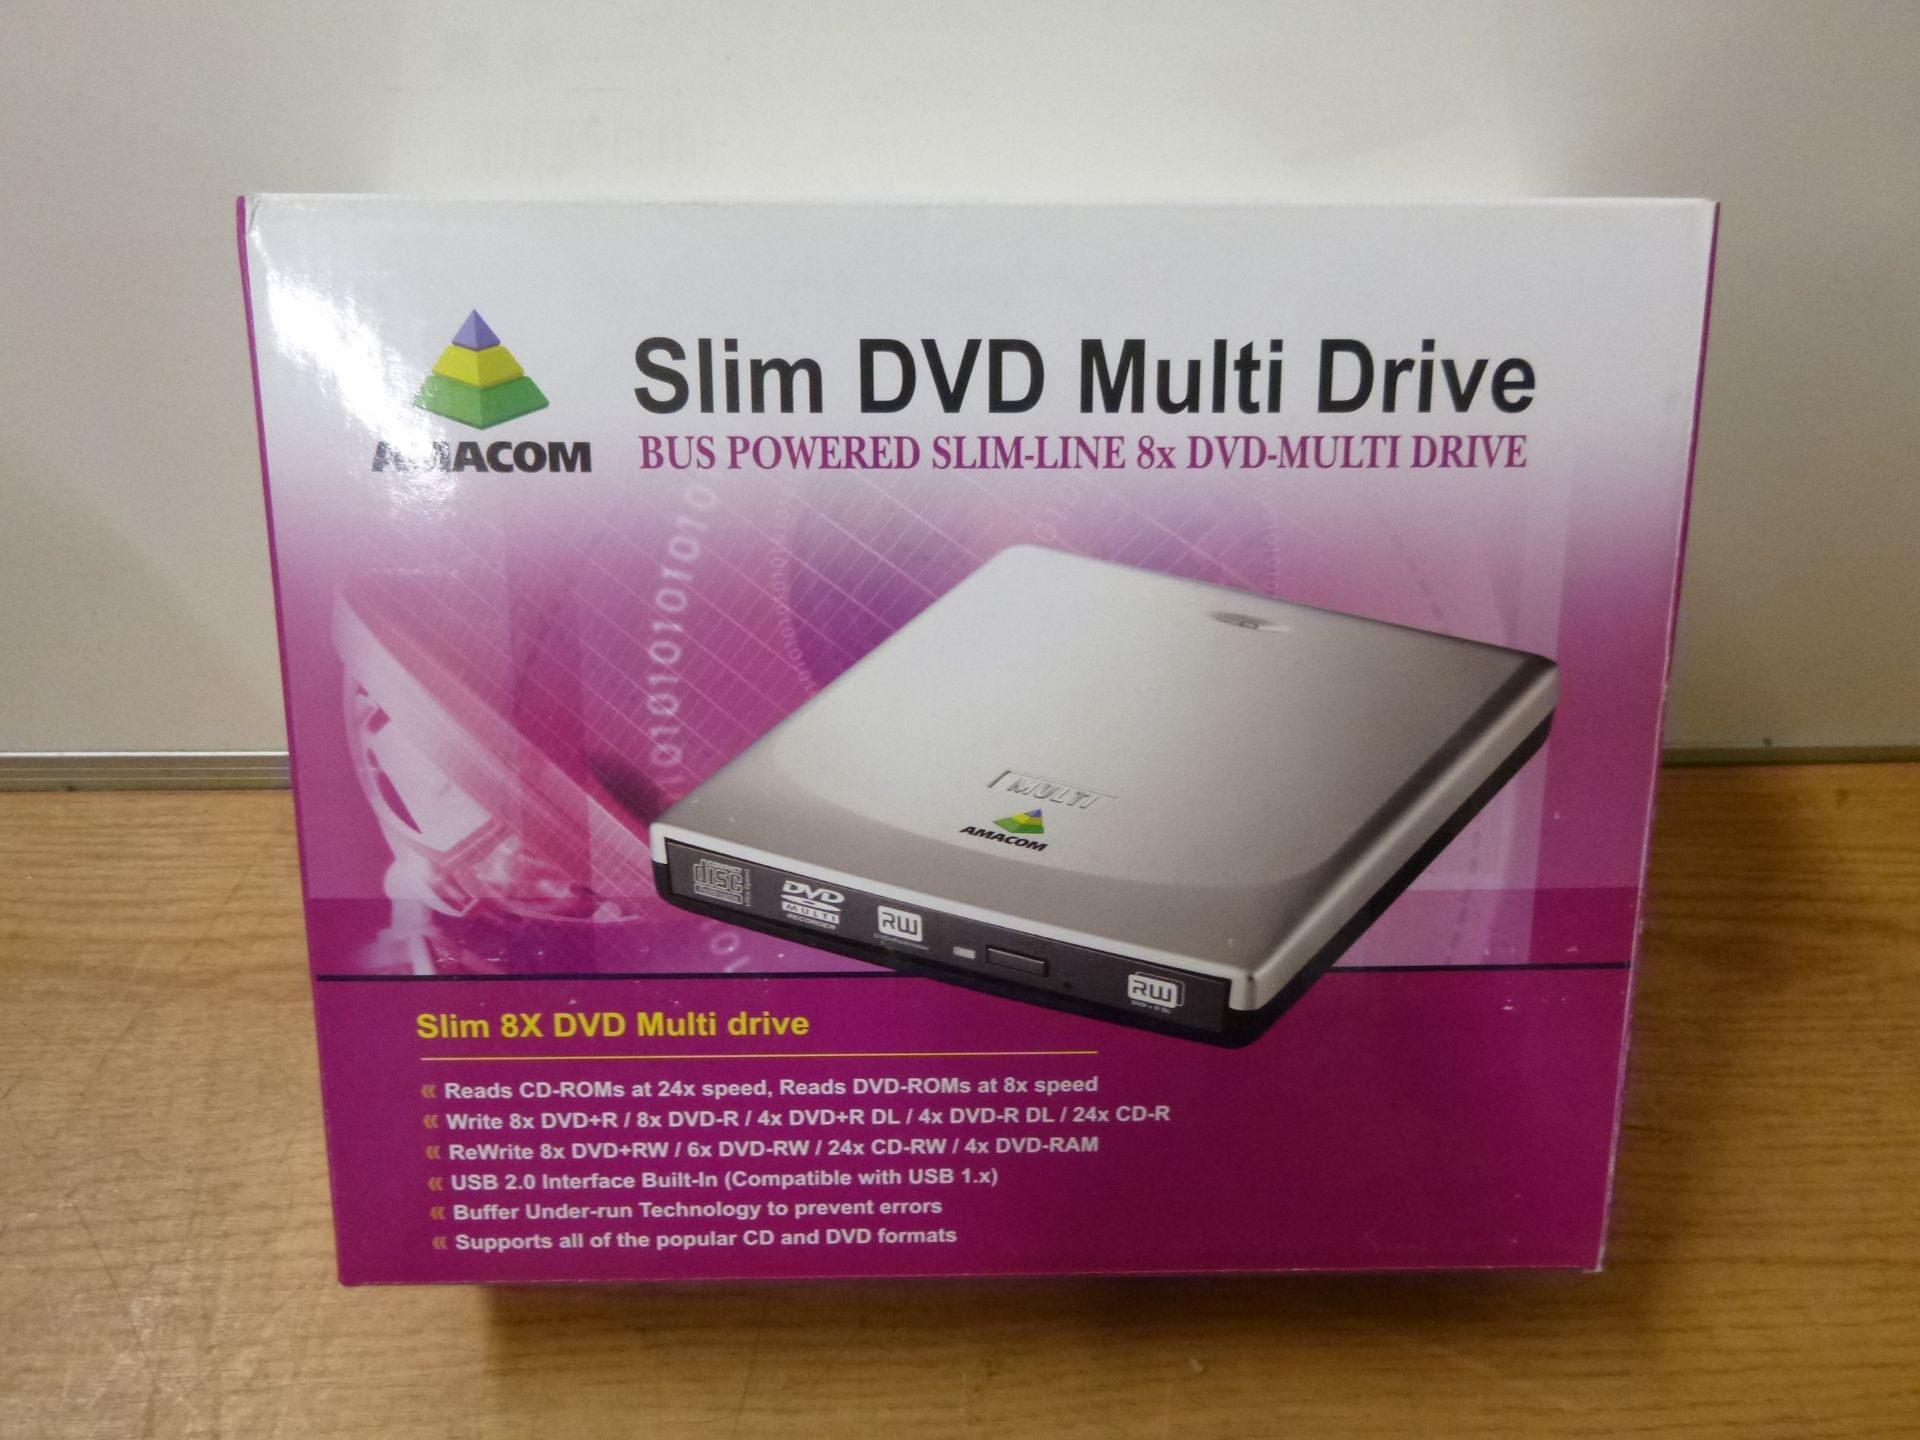 AMACOM SLIM DVD MULTI DRIVE DVDRW. NEW & BOXED. POWERED BY USB.